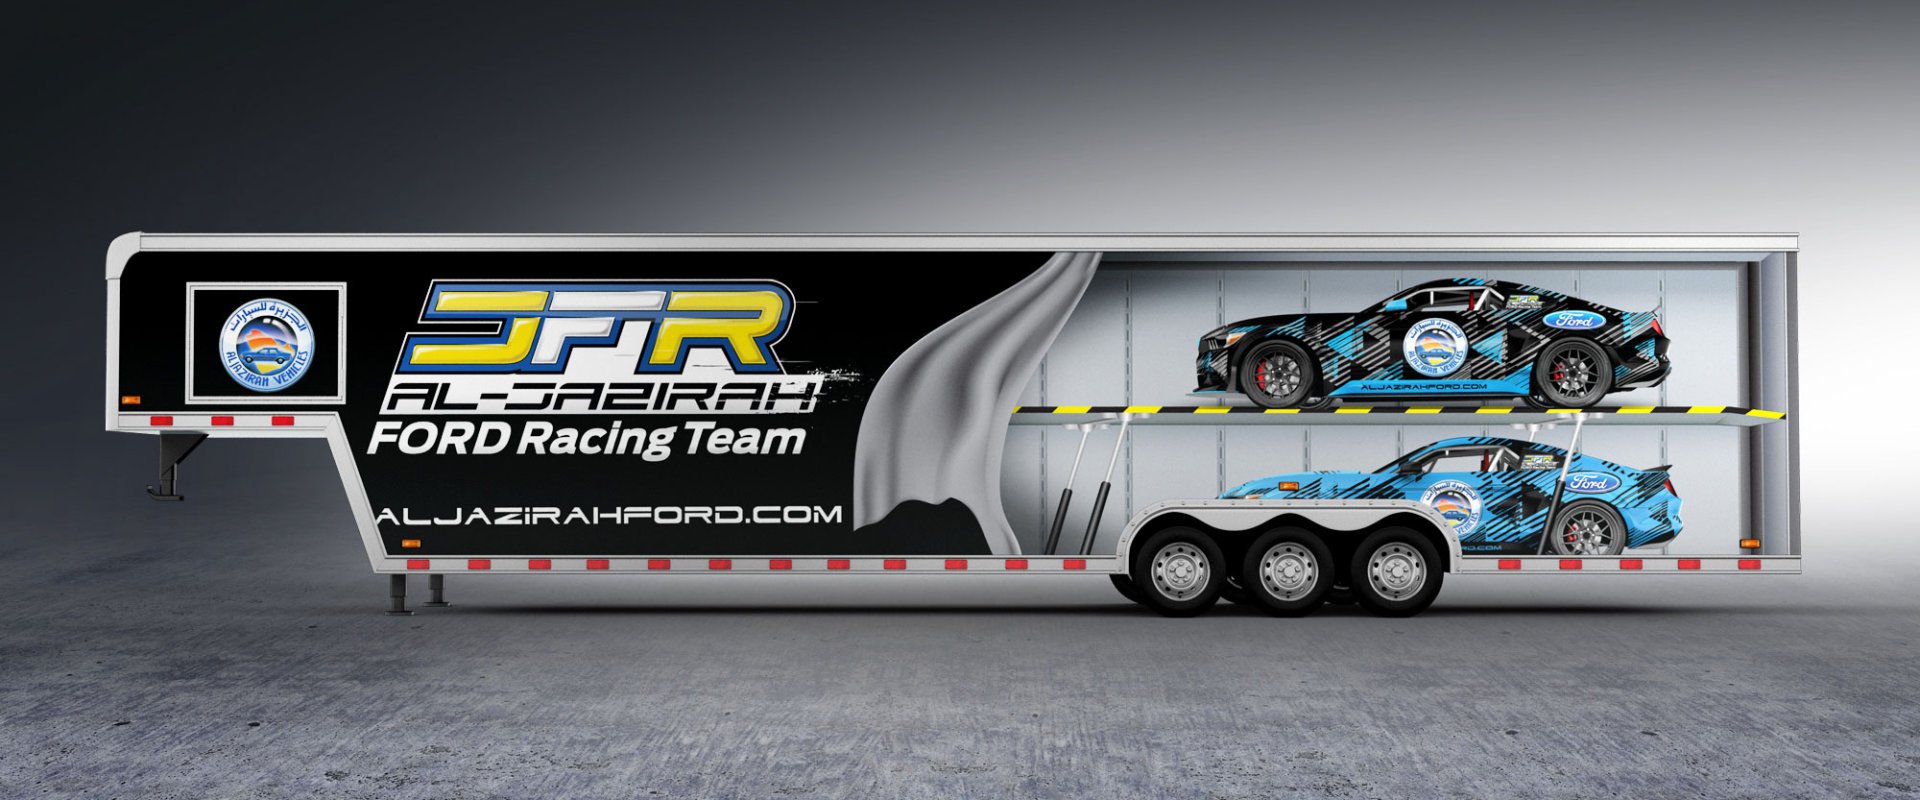 JFR Al Jazirah Ford Racing Team #2